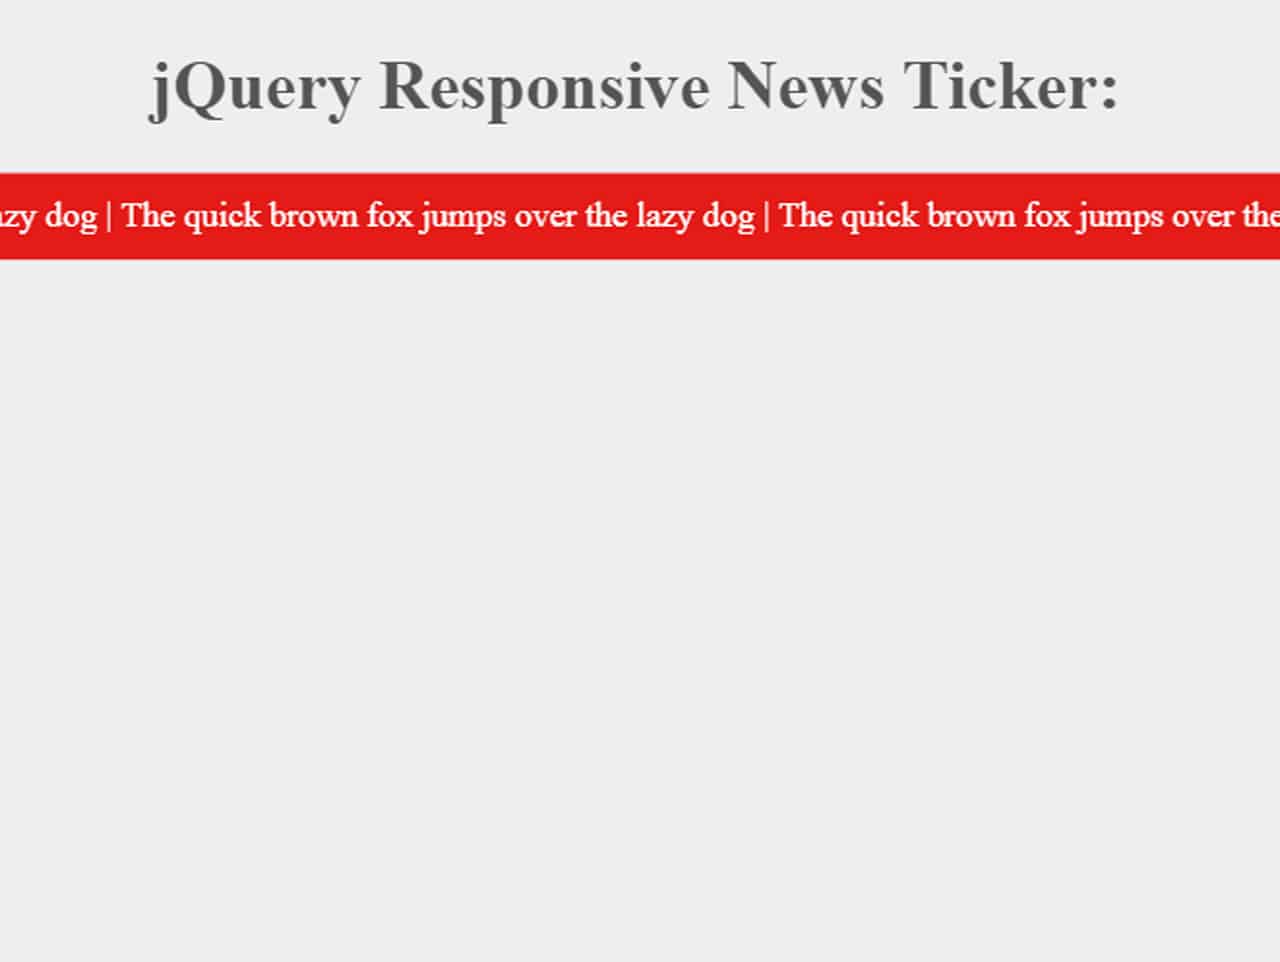 jQuery News Ticker with Responsive Design